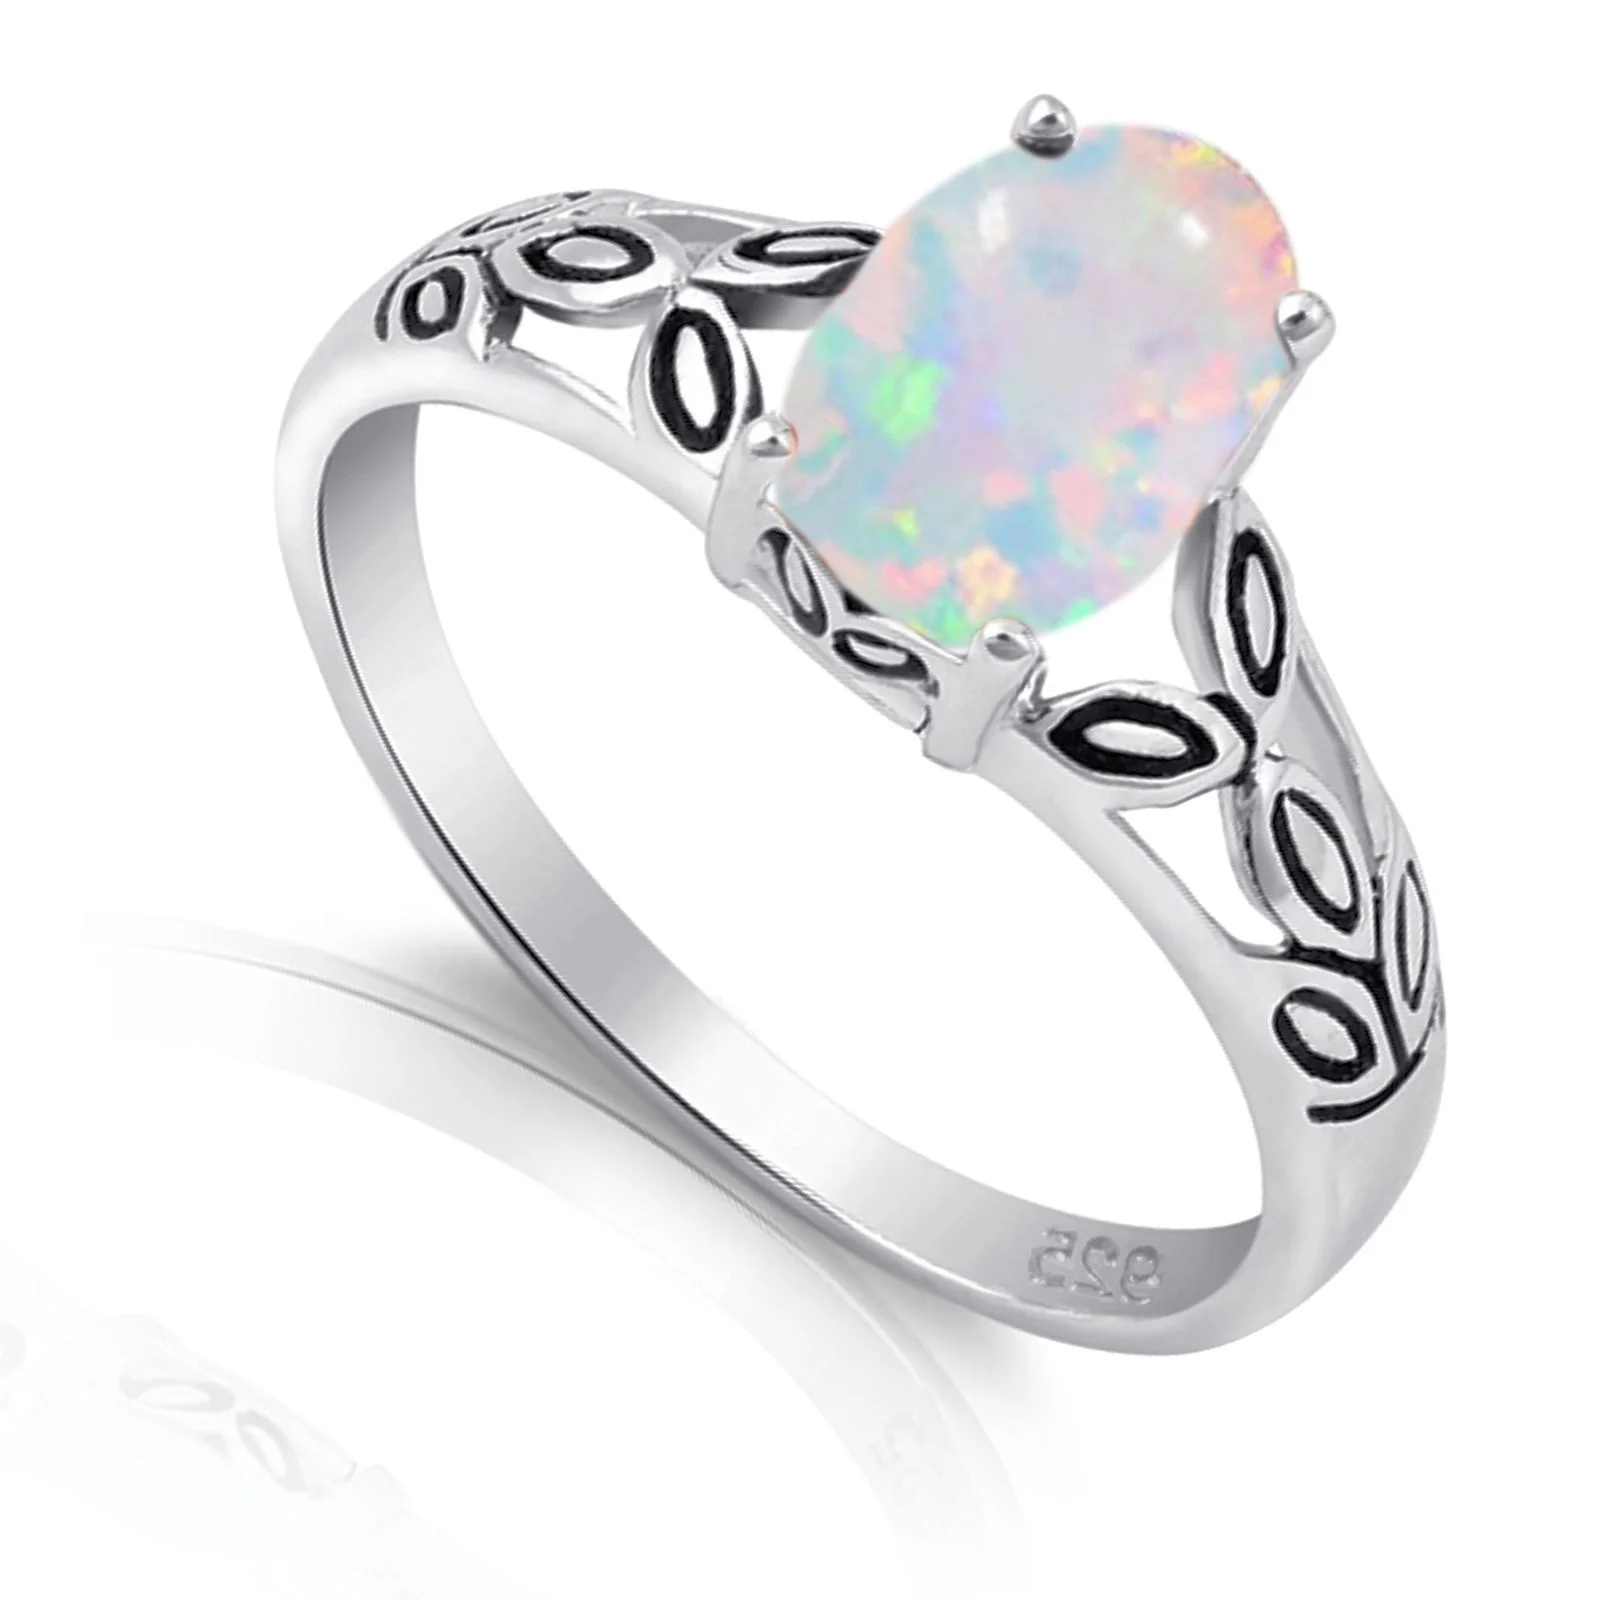 

Luxury Gorgeous Women Jewelry Imitation Opal Bridal Rings for Wedding Engagement Set Gifts